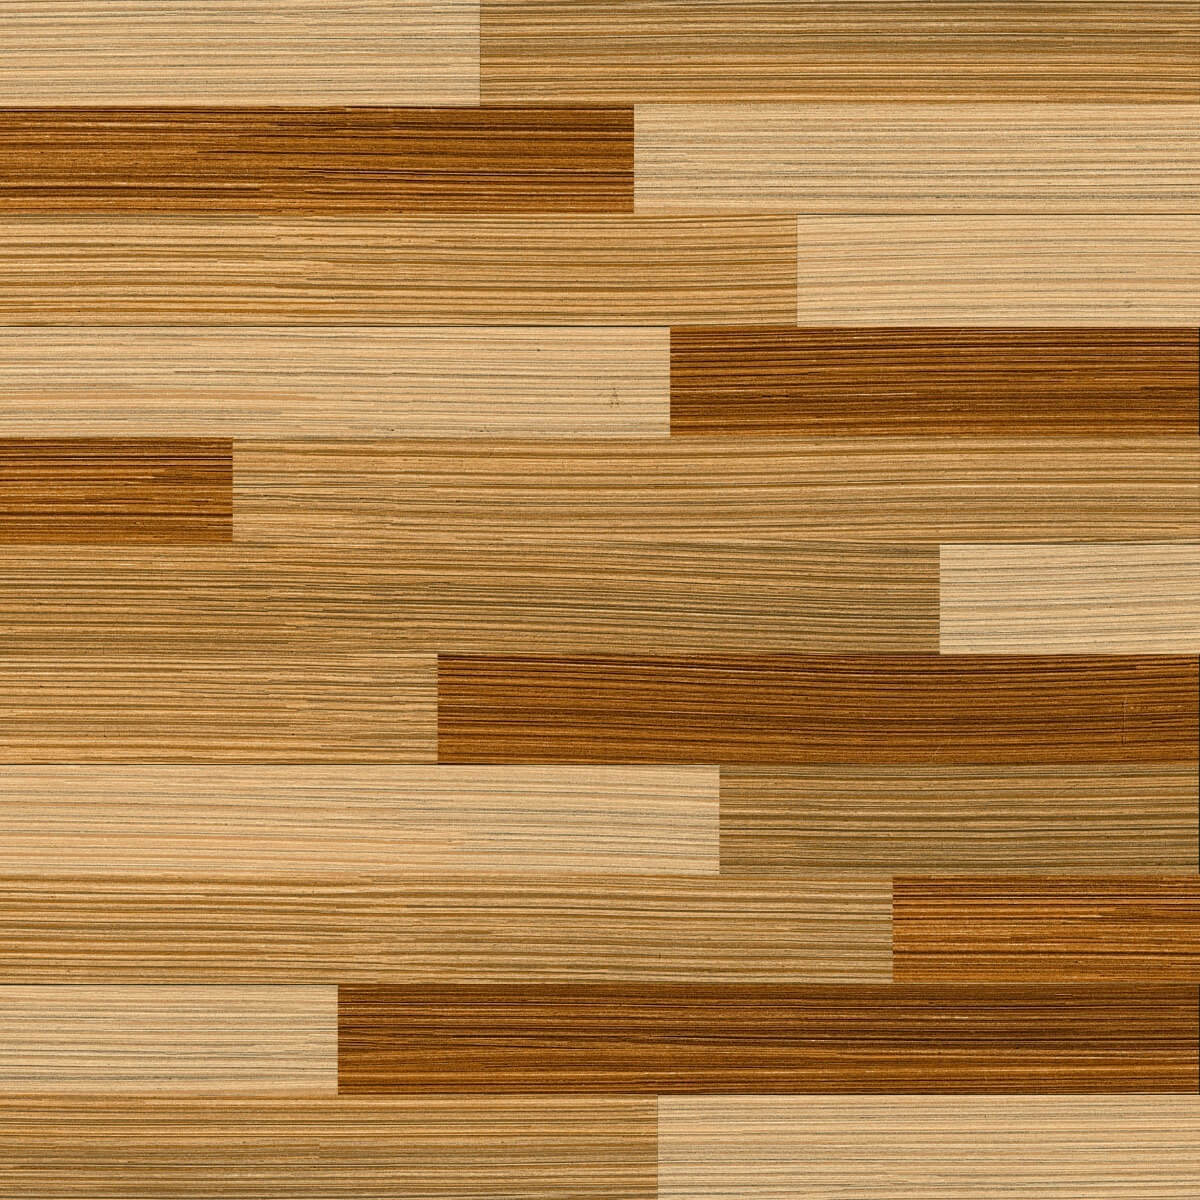 Wooden Tiles for Bathroom Tiles